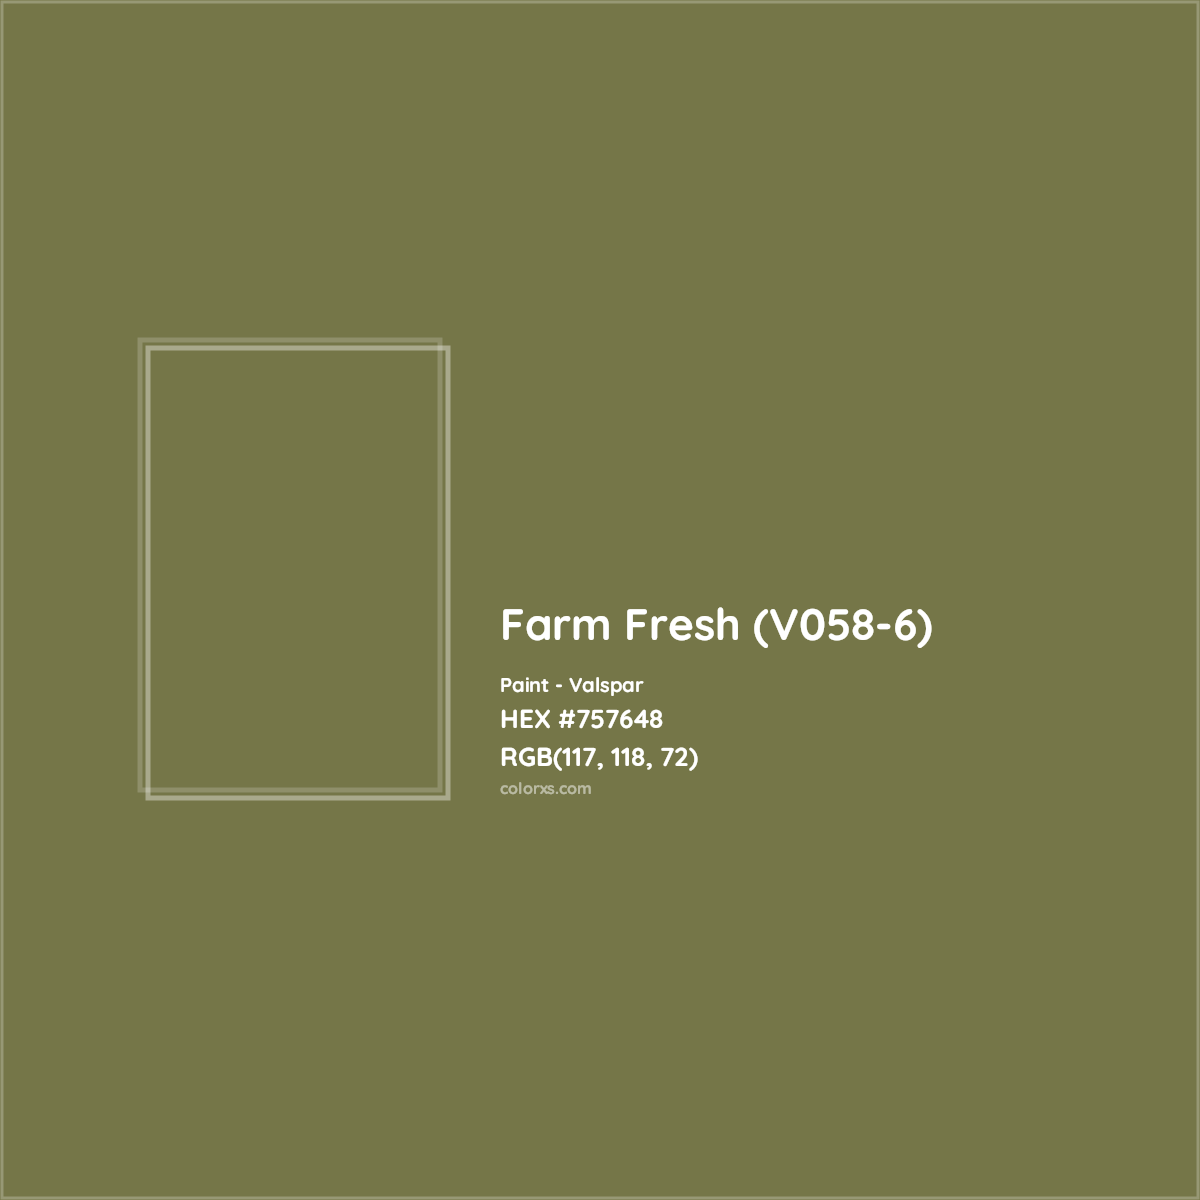 HEX #757648 Farm Fresh (V058-6) Paint Valspar - Color Code